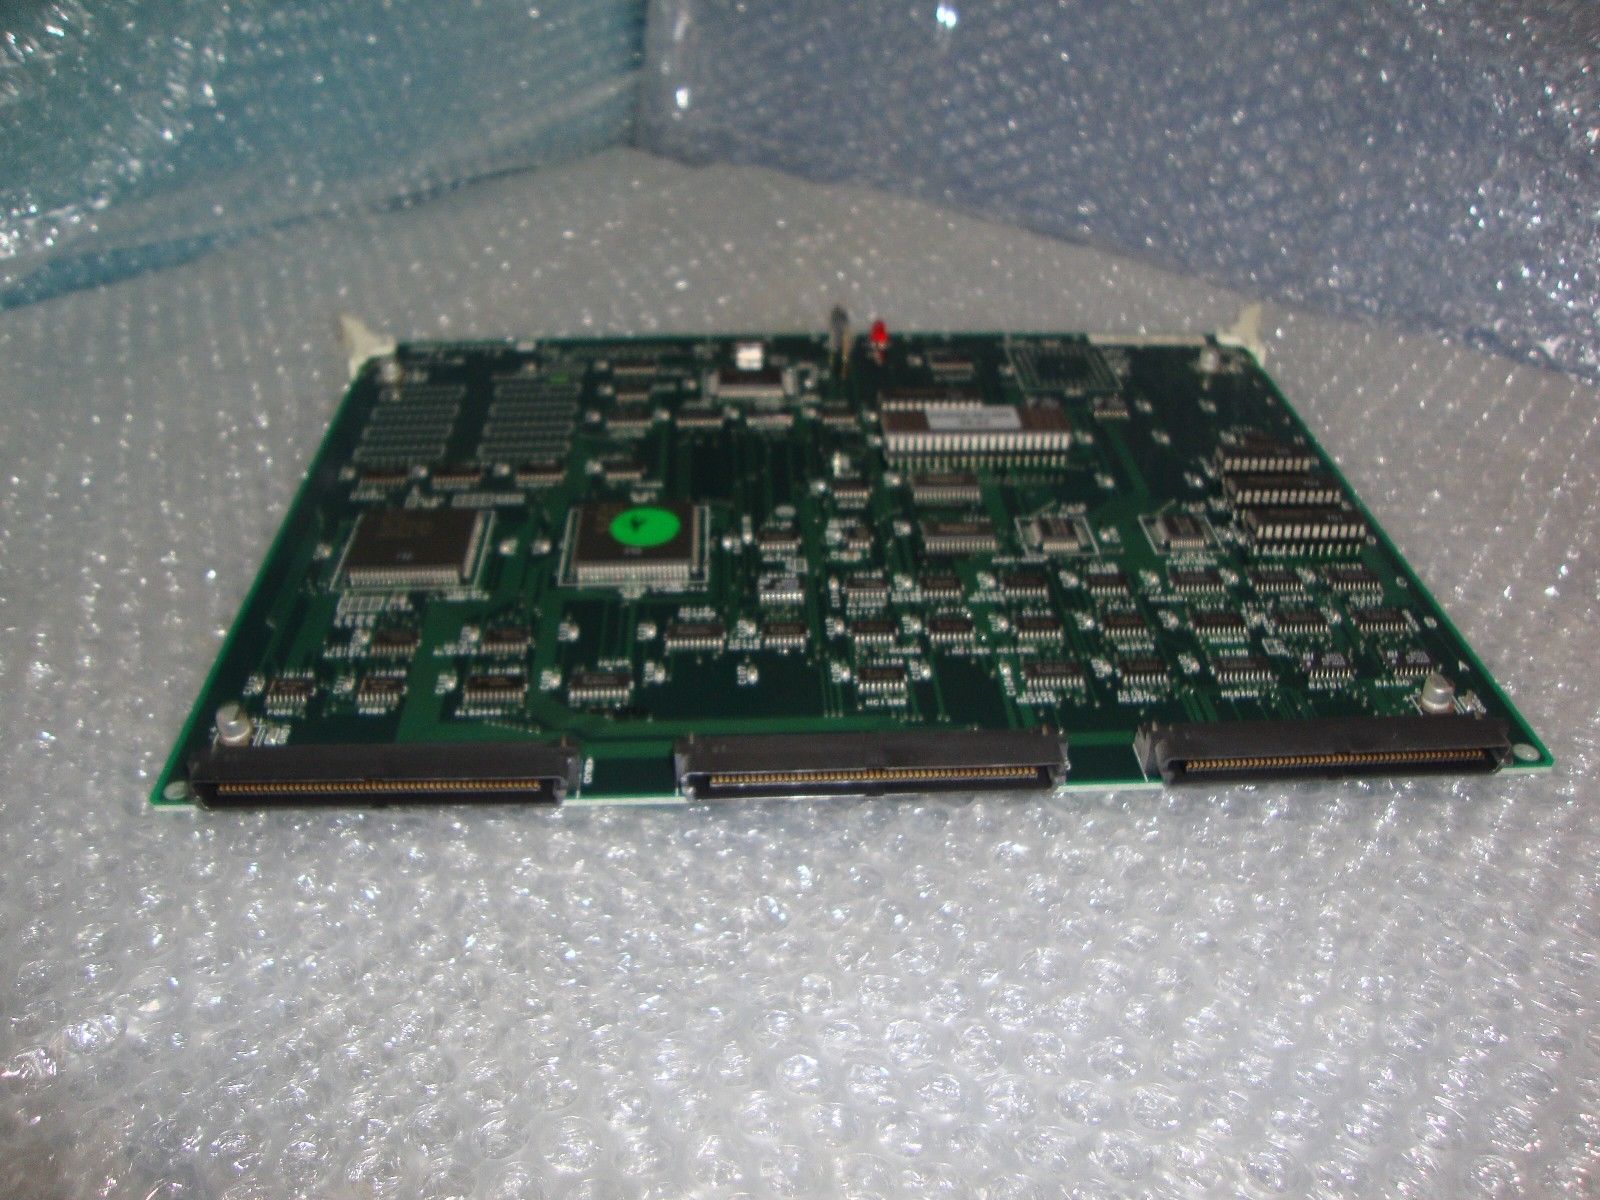 ALOKA SSD-1400 Ultrasound board  ep399600bd DIAGNOSTIC ULTRASOUND MACHINES FOR SALE